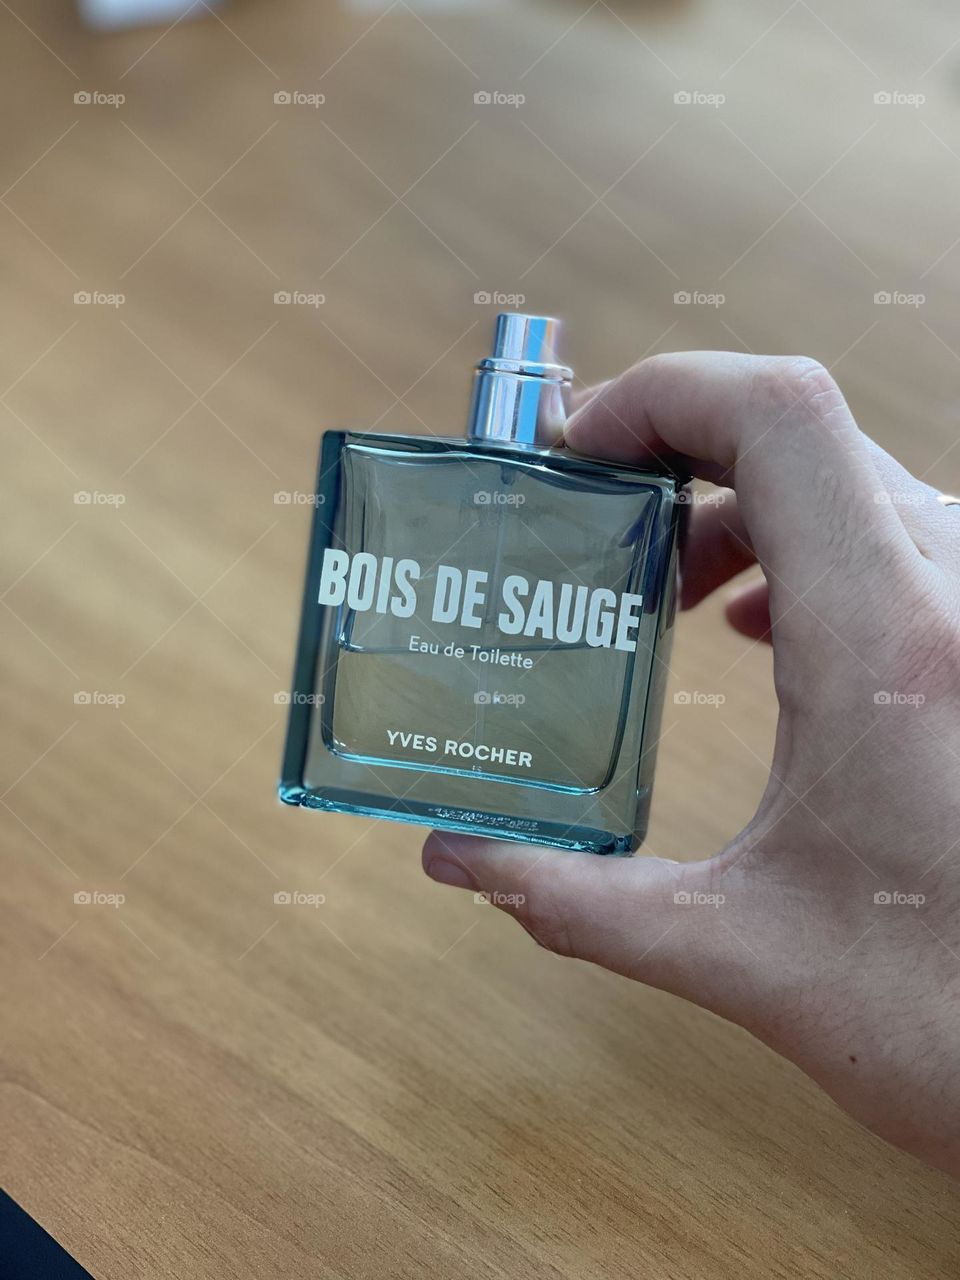 My favorite french parfum 😍